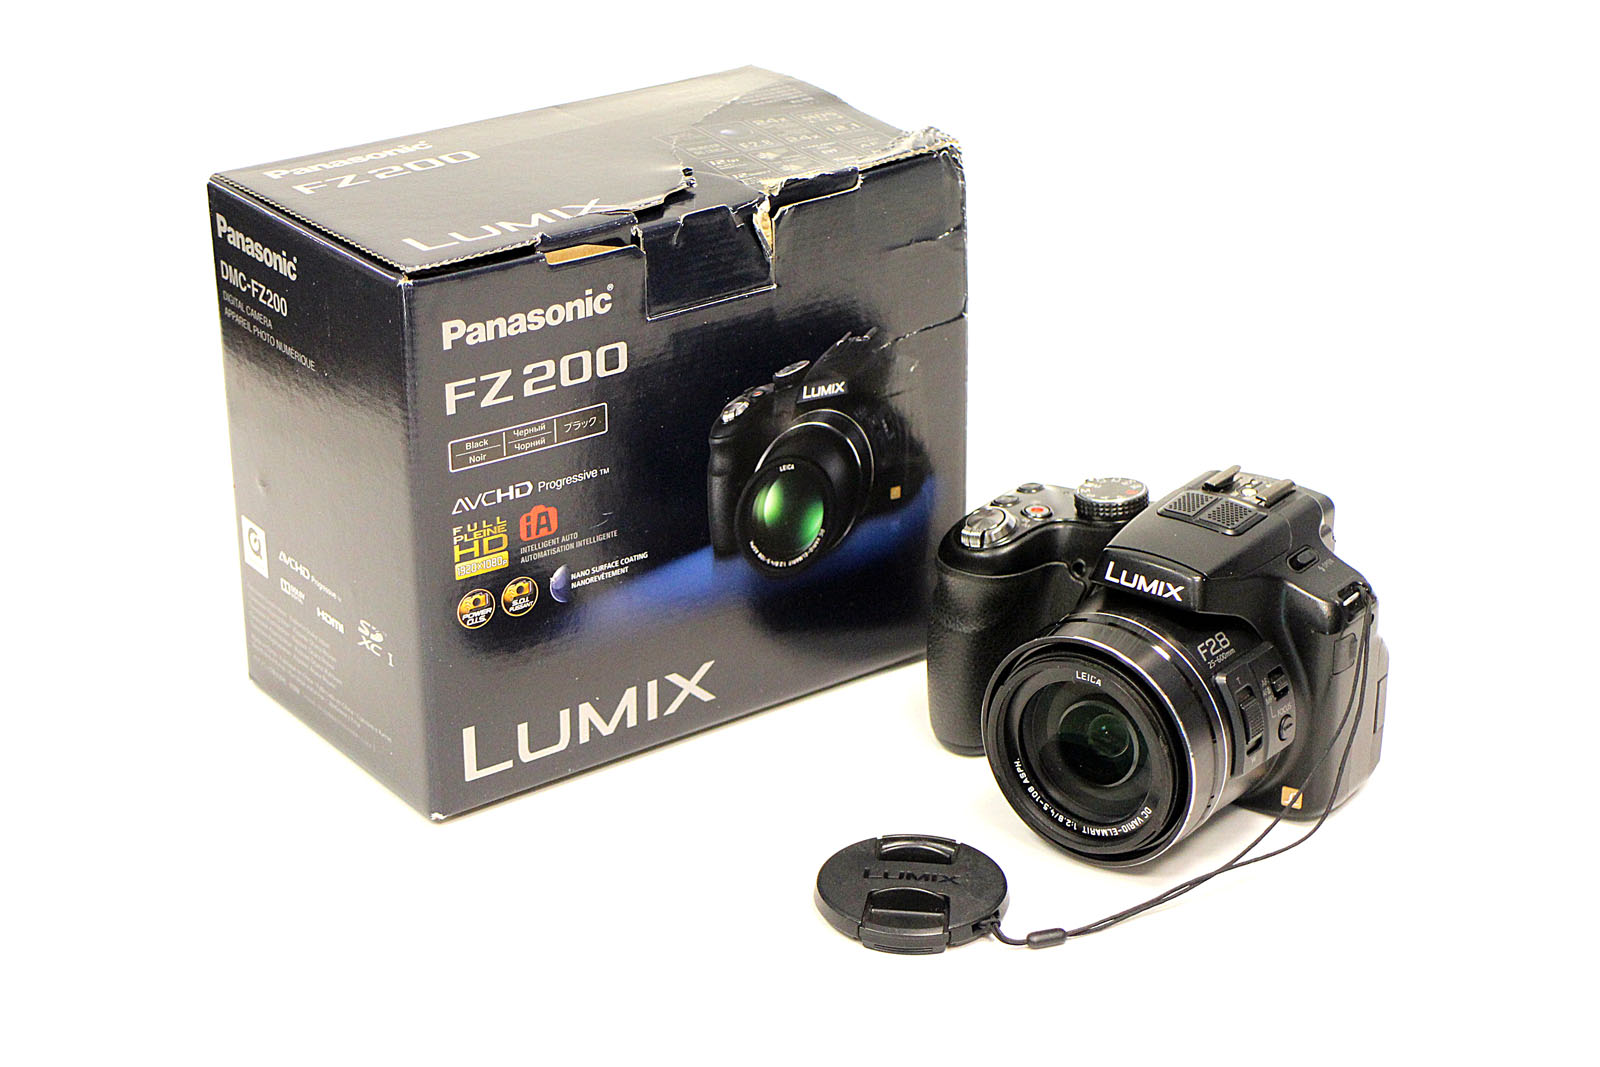 A Panasonic Lumix FZ200 Digital Camera, in maker's box